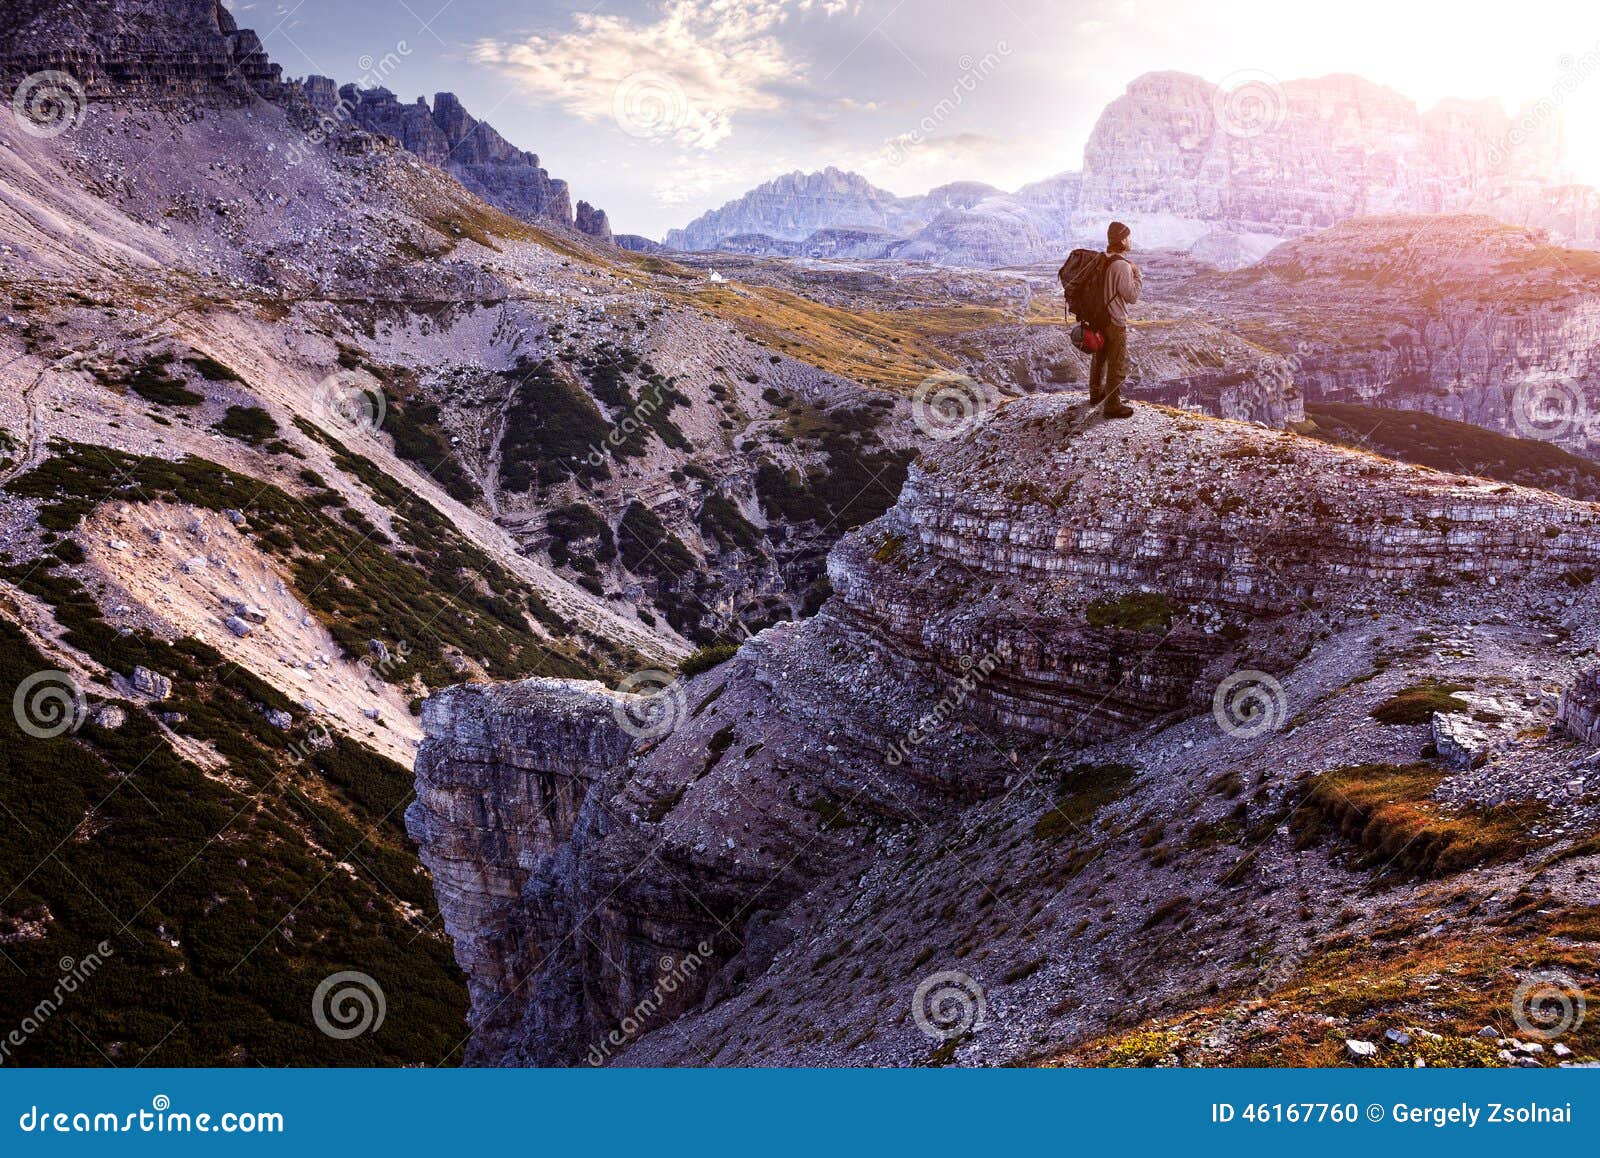 italy, dolomites - male hiker standing on the barren rocks